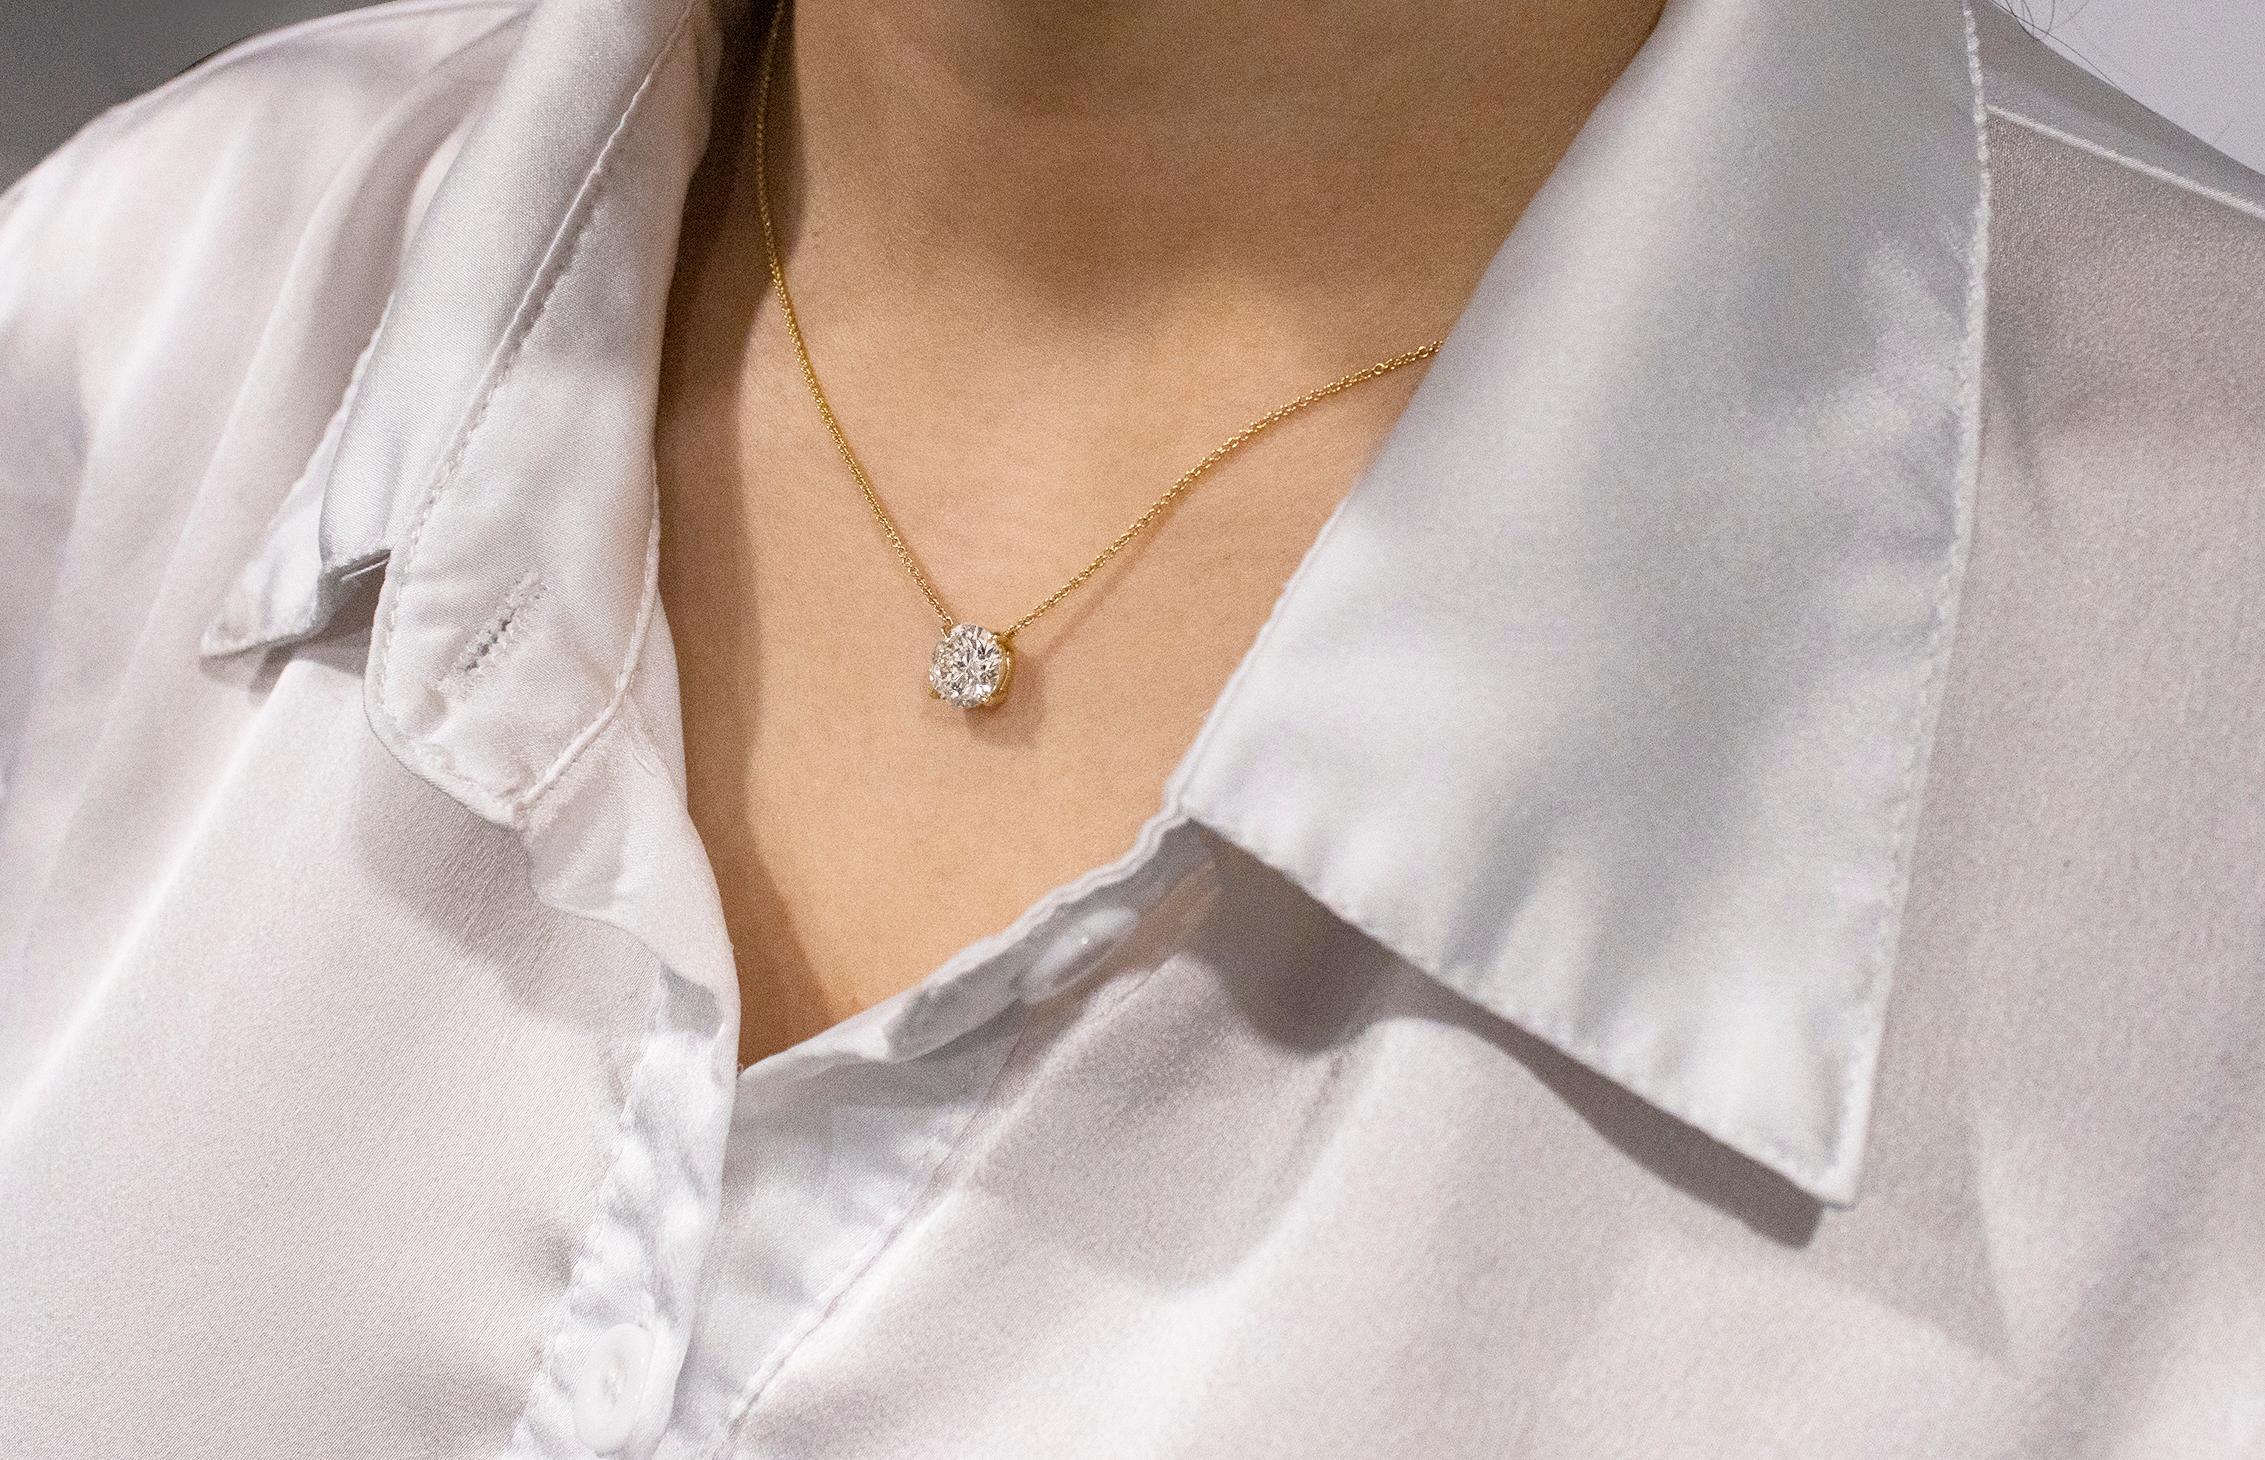 Roman Malakov 2.01 Carats Round Brilliant Diamond Solitaire Pendant Necklace In New Condition For Sale In New York, NY